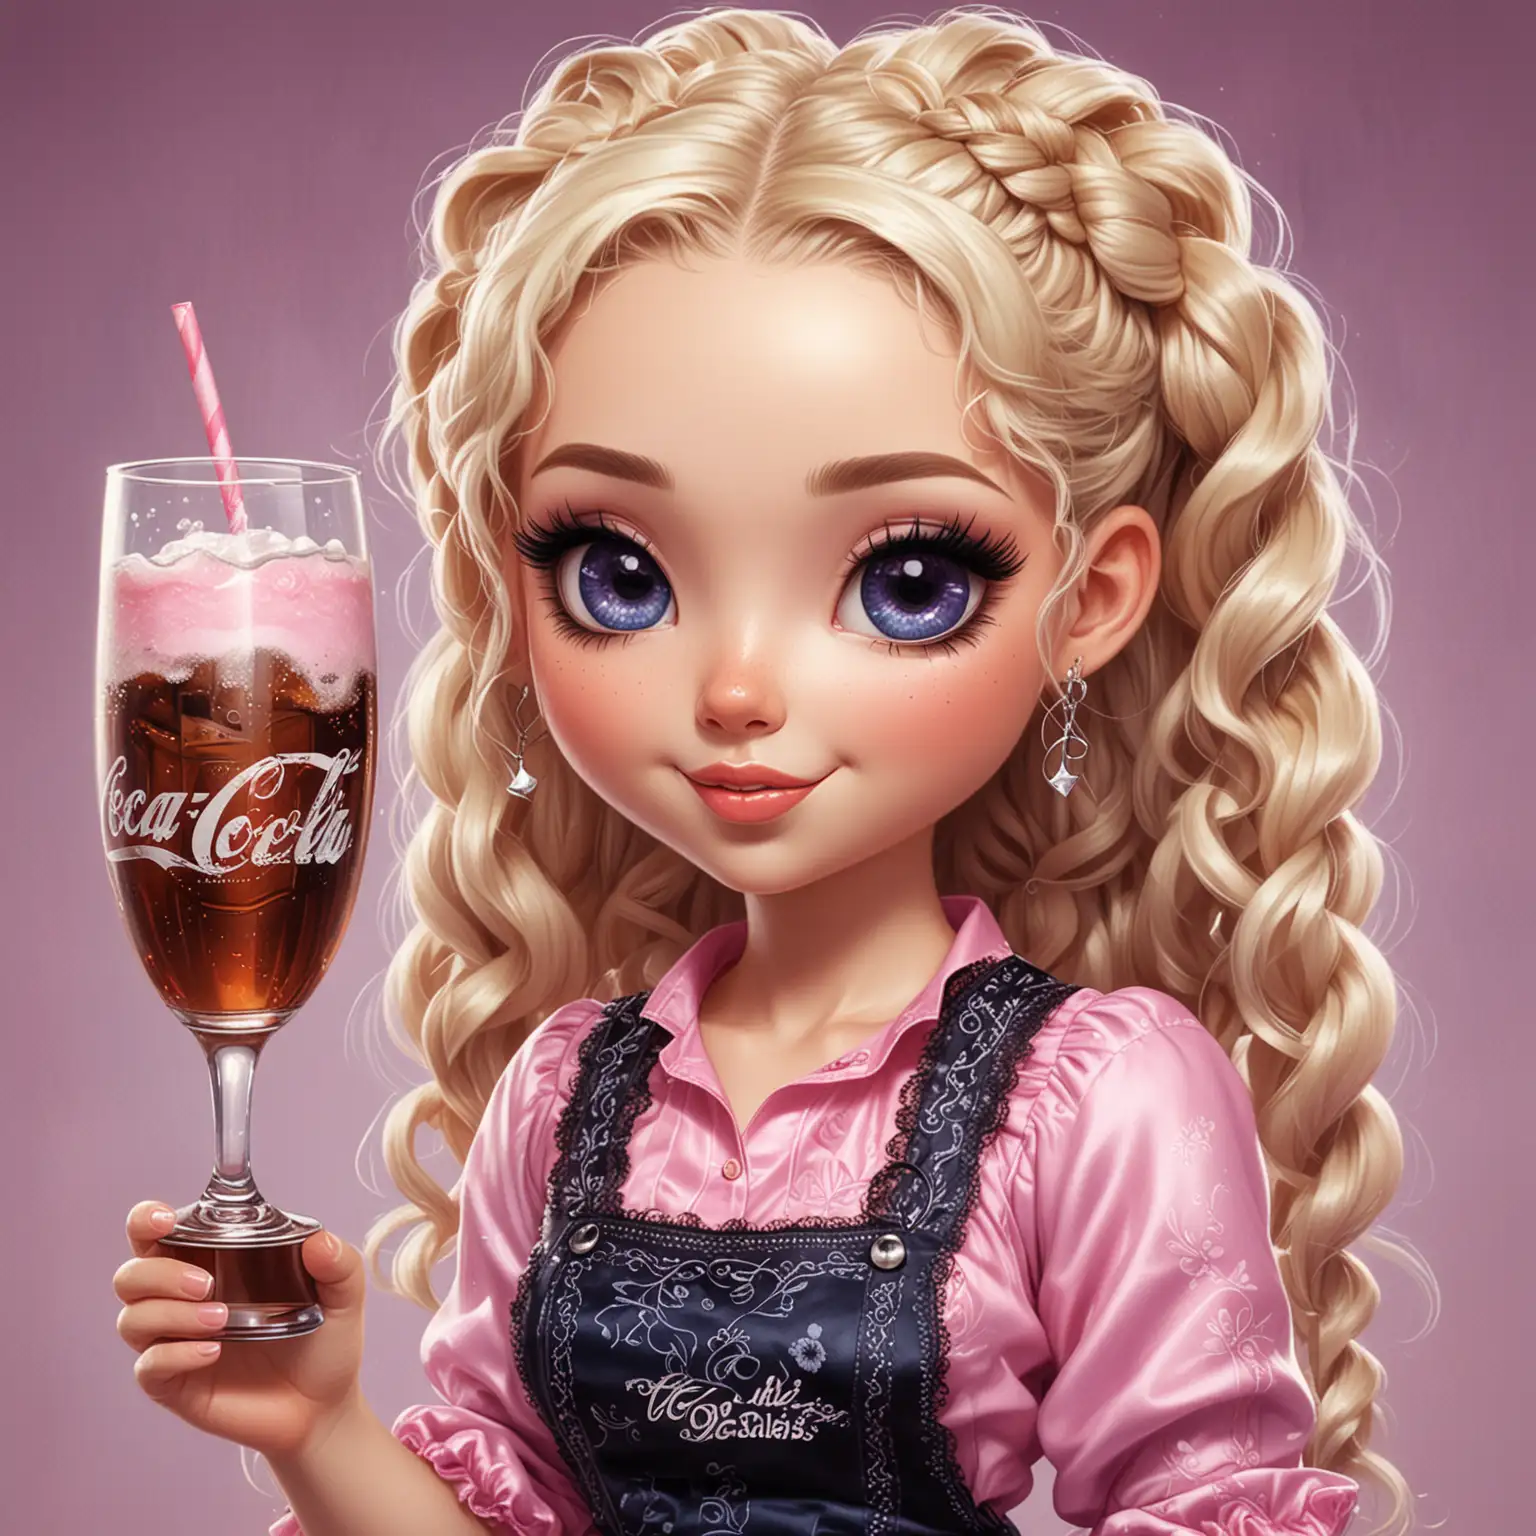 Stylish-Caucasian-Woman-Enjoying-a-Refreshing-Coke-with-Smile-Bubble